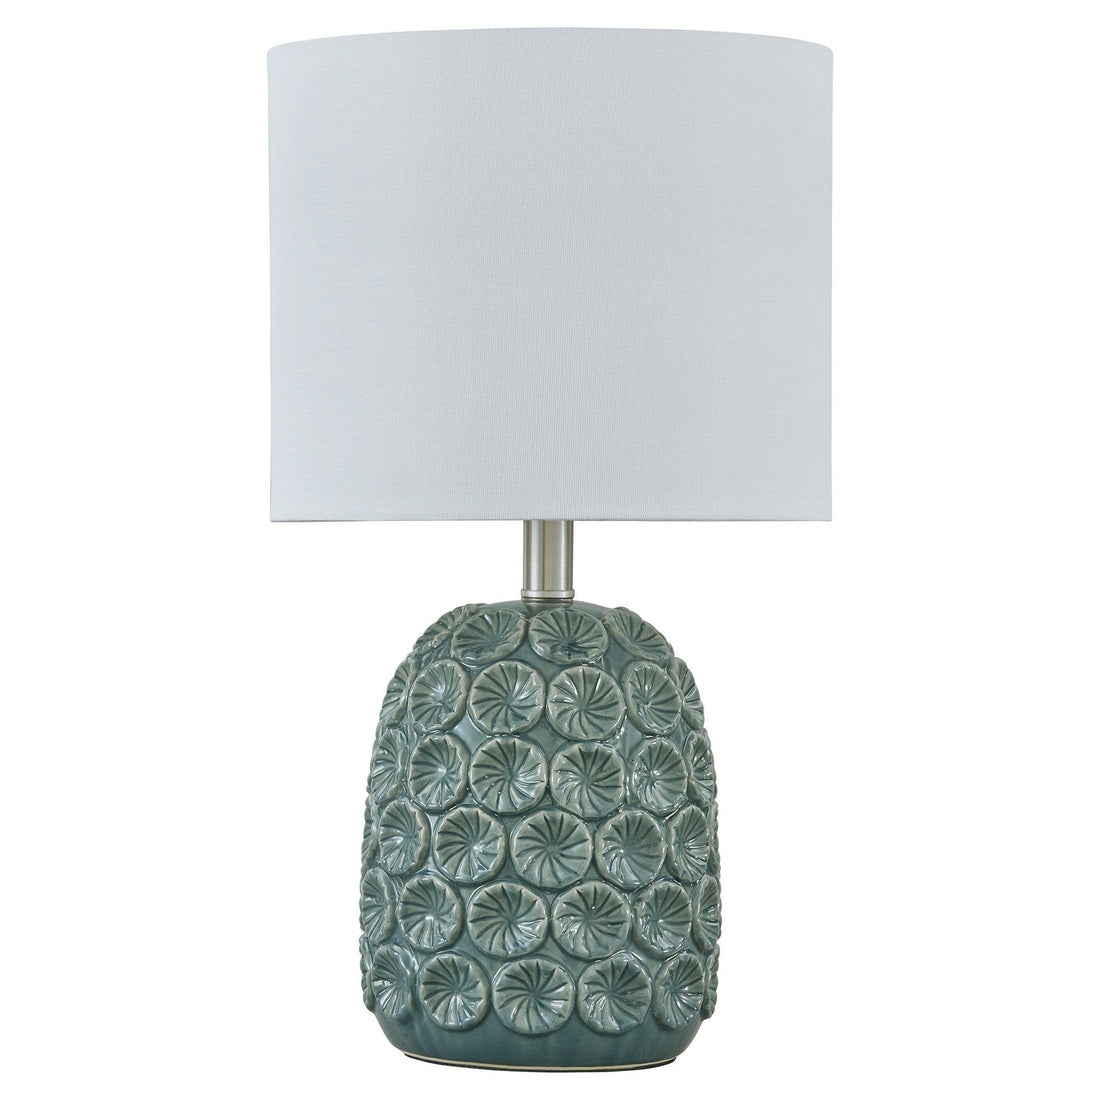 Moorbank Table Lamp Ash-L180074